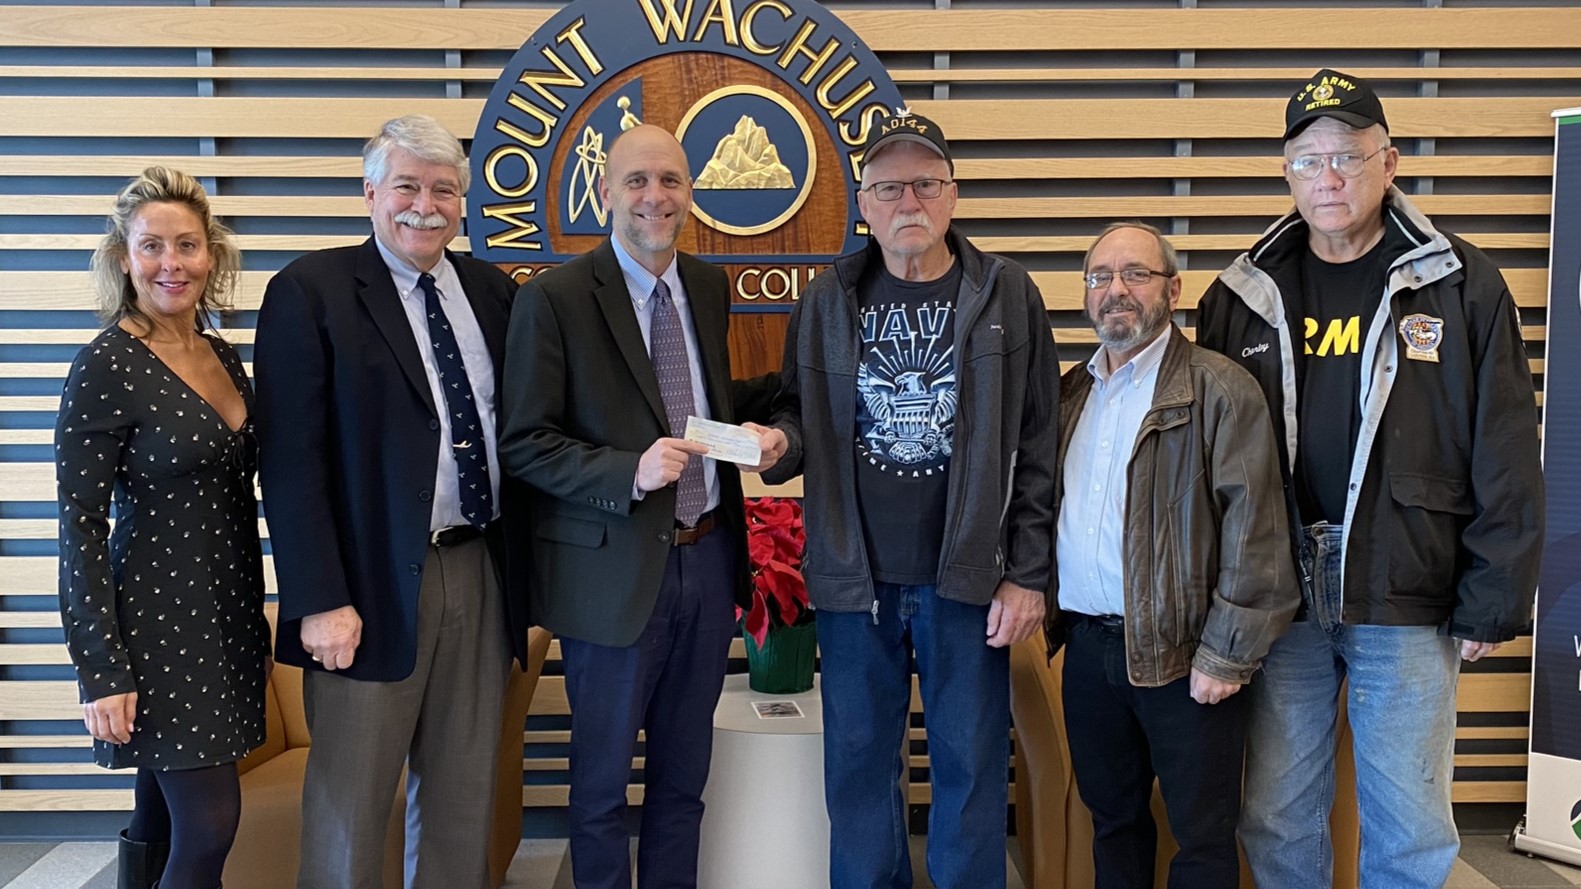 Vietnam veterans deliver donation to MWCC Foundation